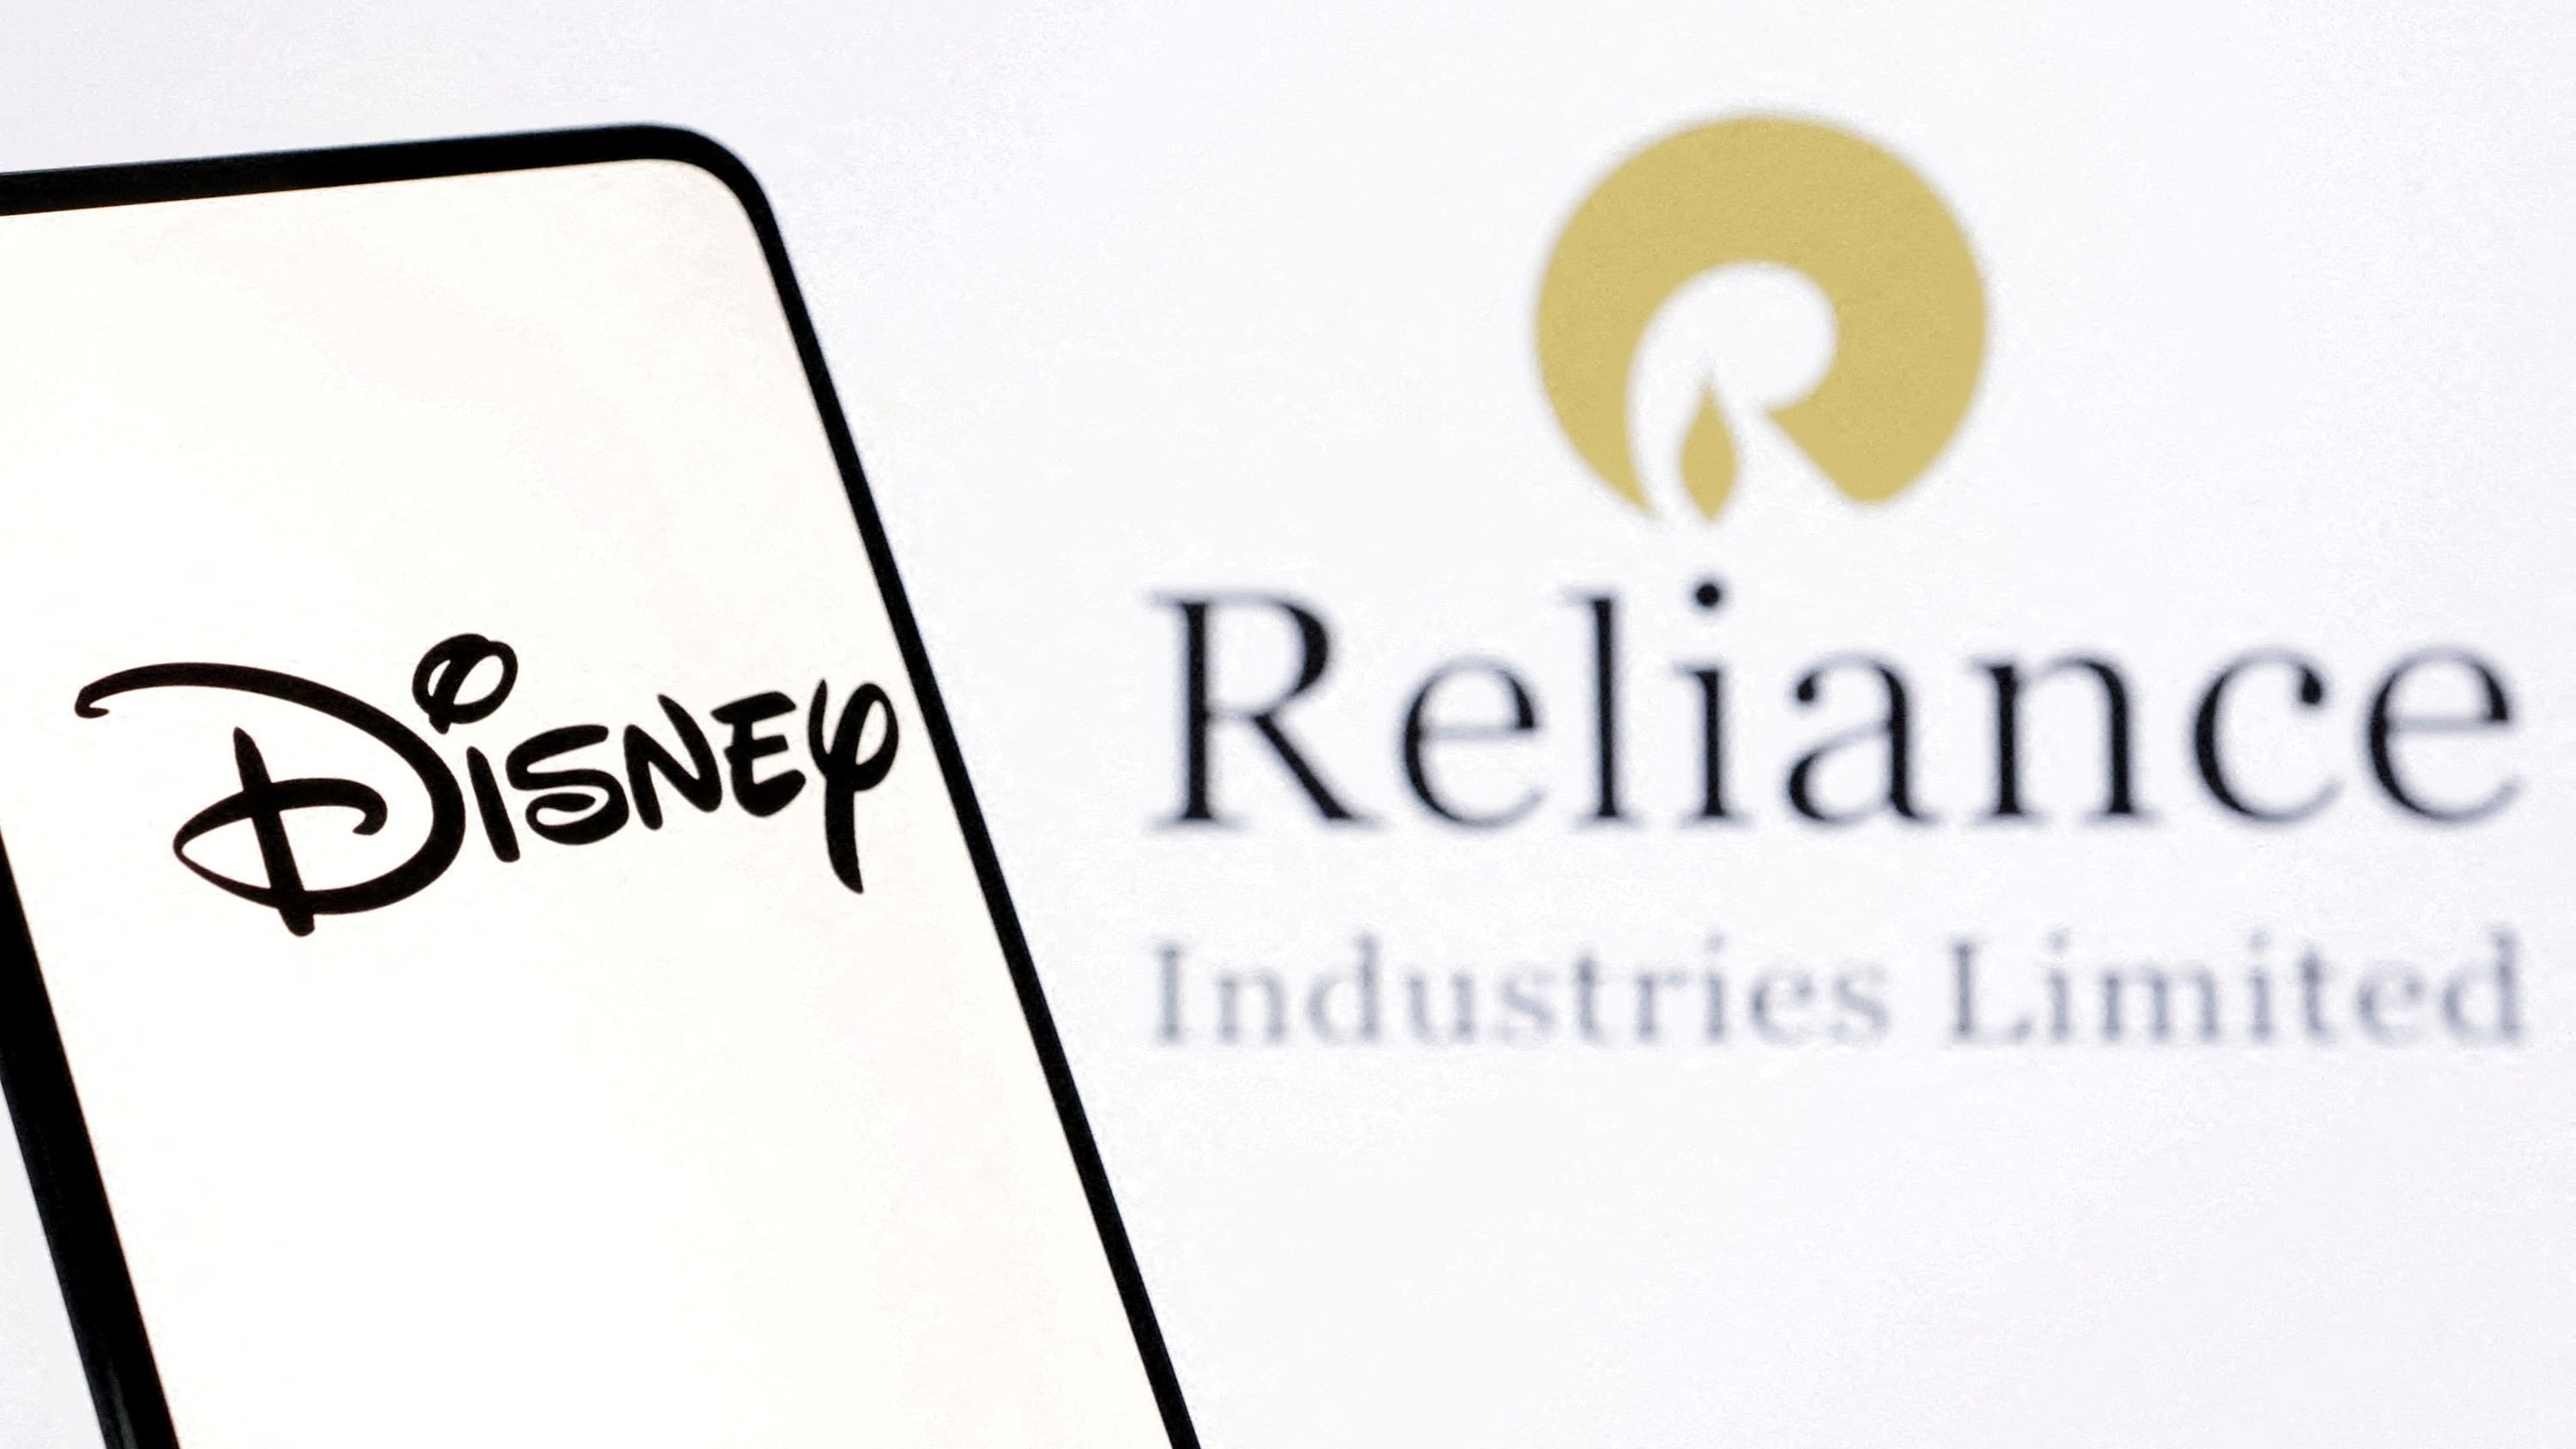 <div class="paragraphs"><p>llustration shows Disney and Reliance logos.</p></div>